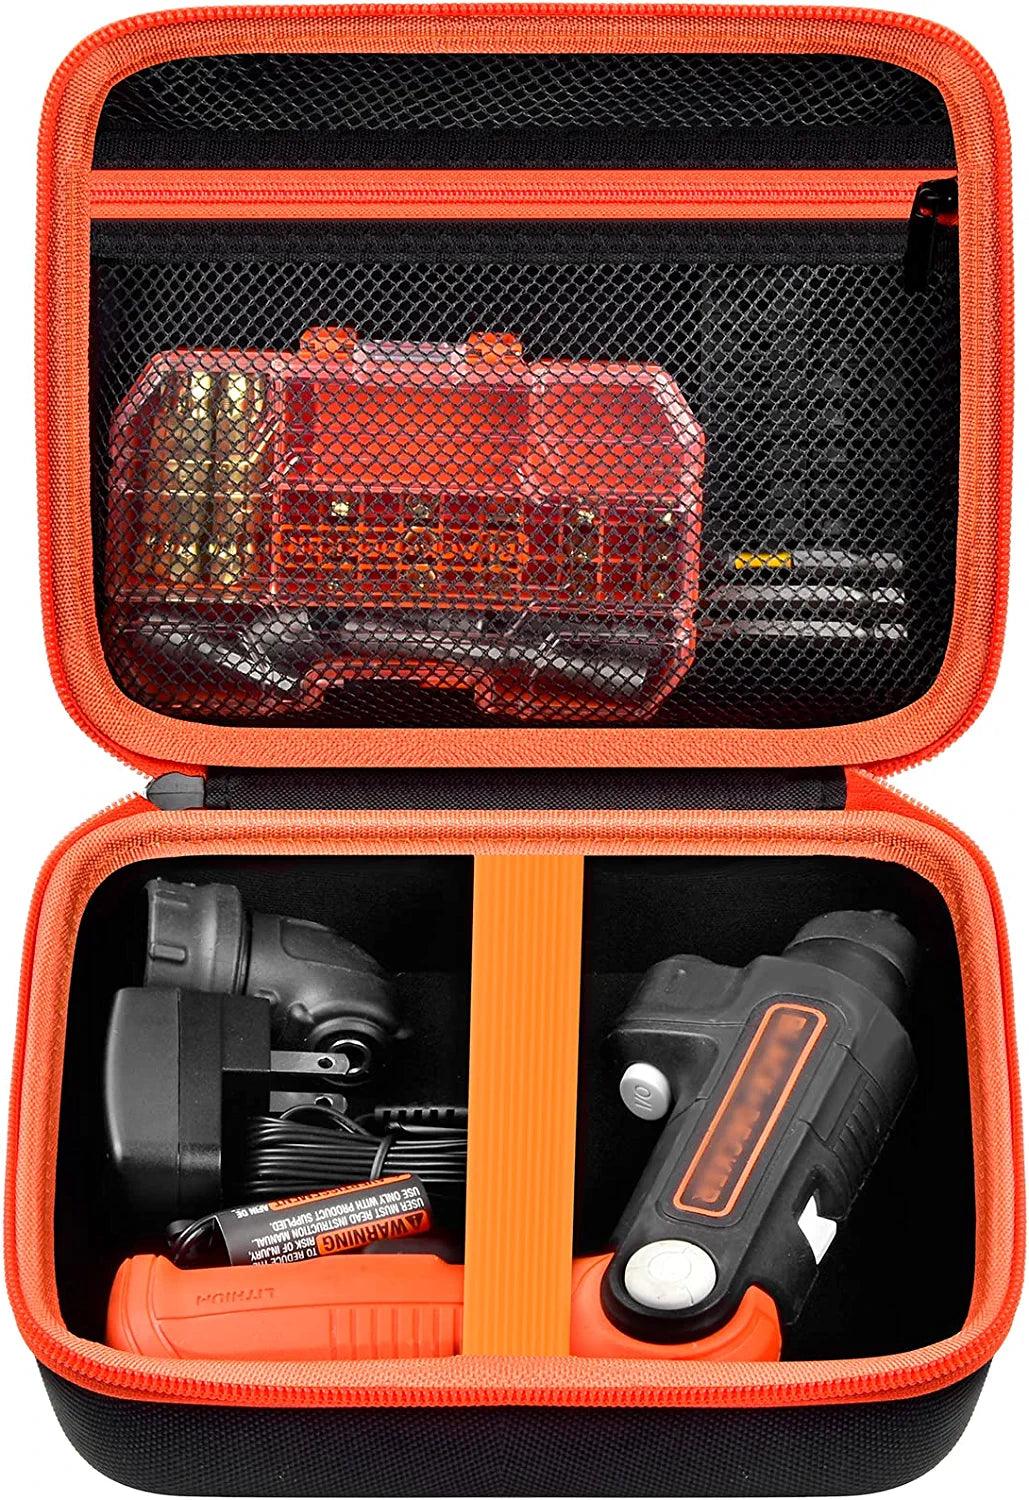 Black & Decker LI2000 3-Position Rechargeable Screwdriver Kit, 3.6 V